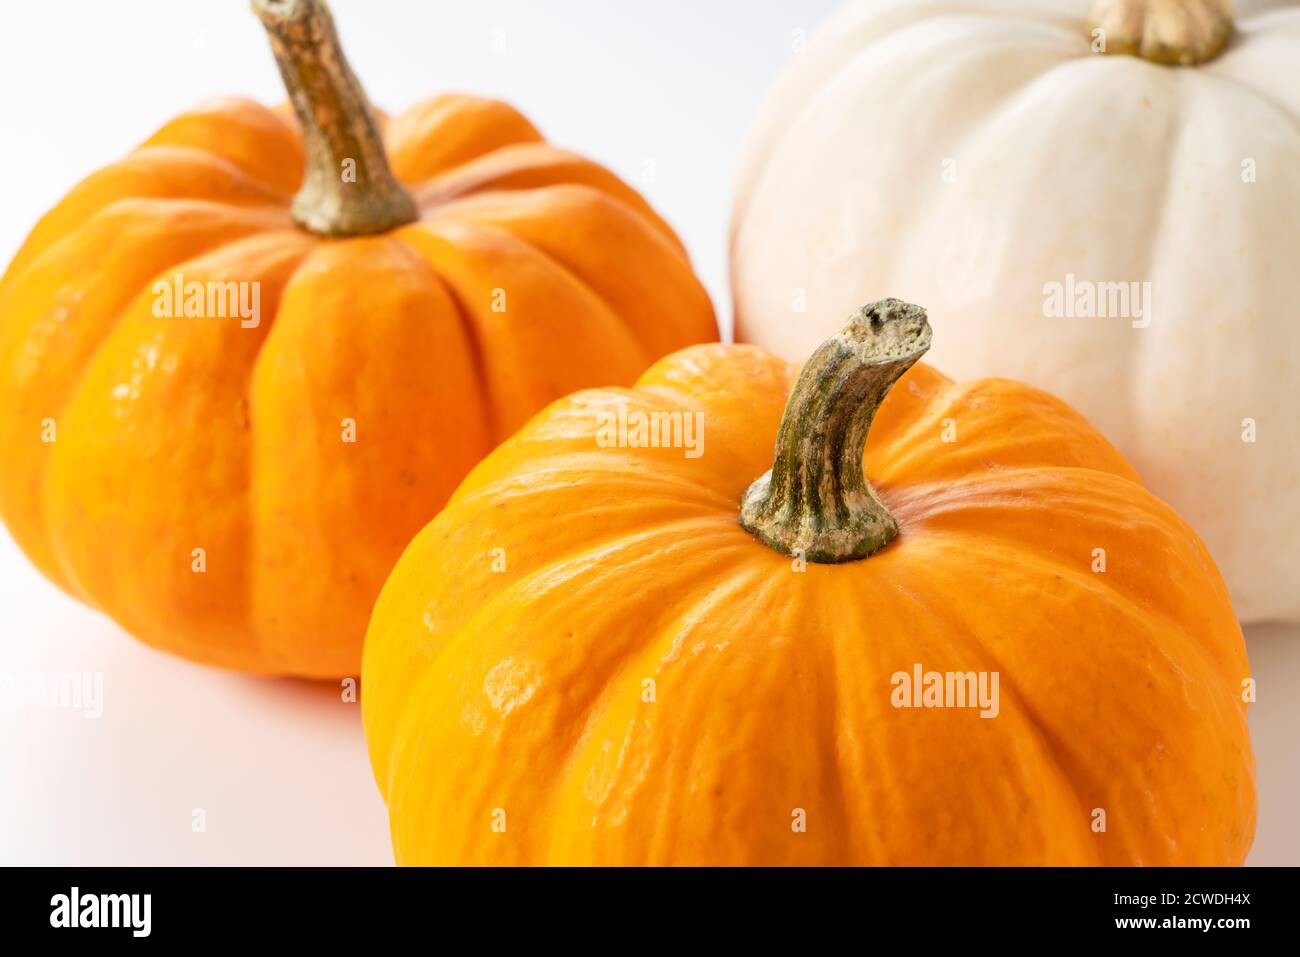 Orange and white pumpkin on a white background Stock Photo